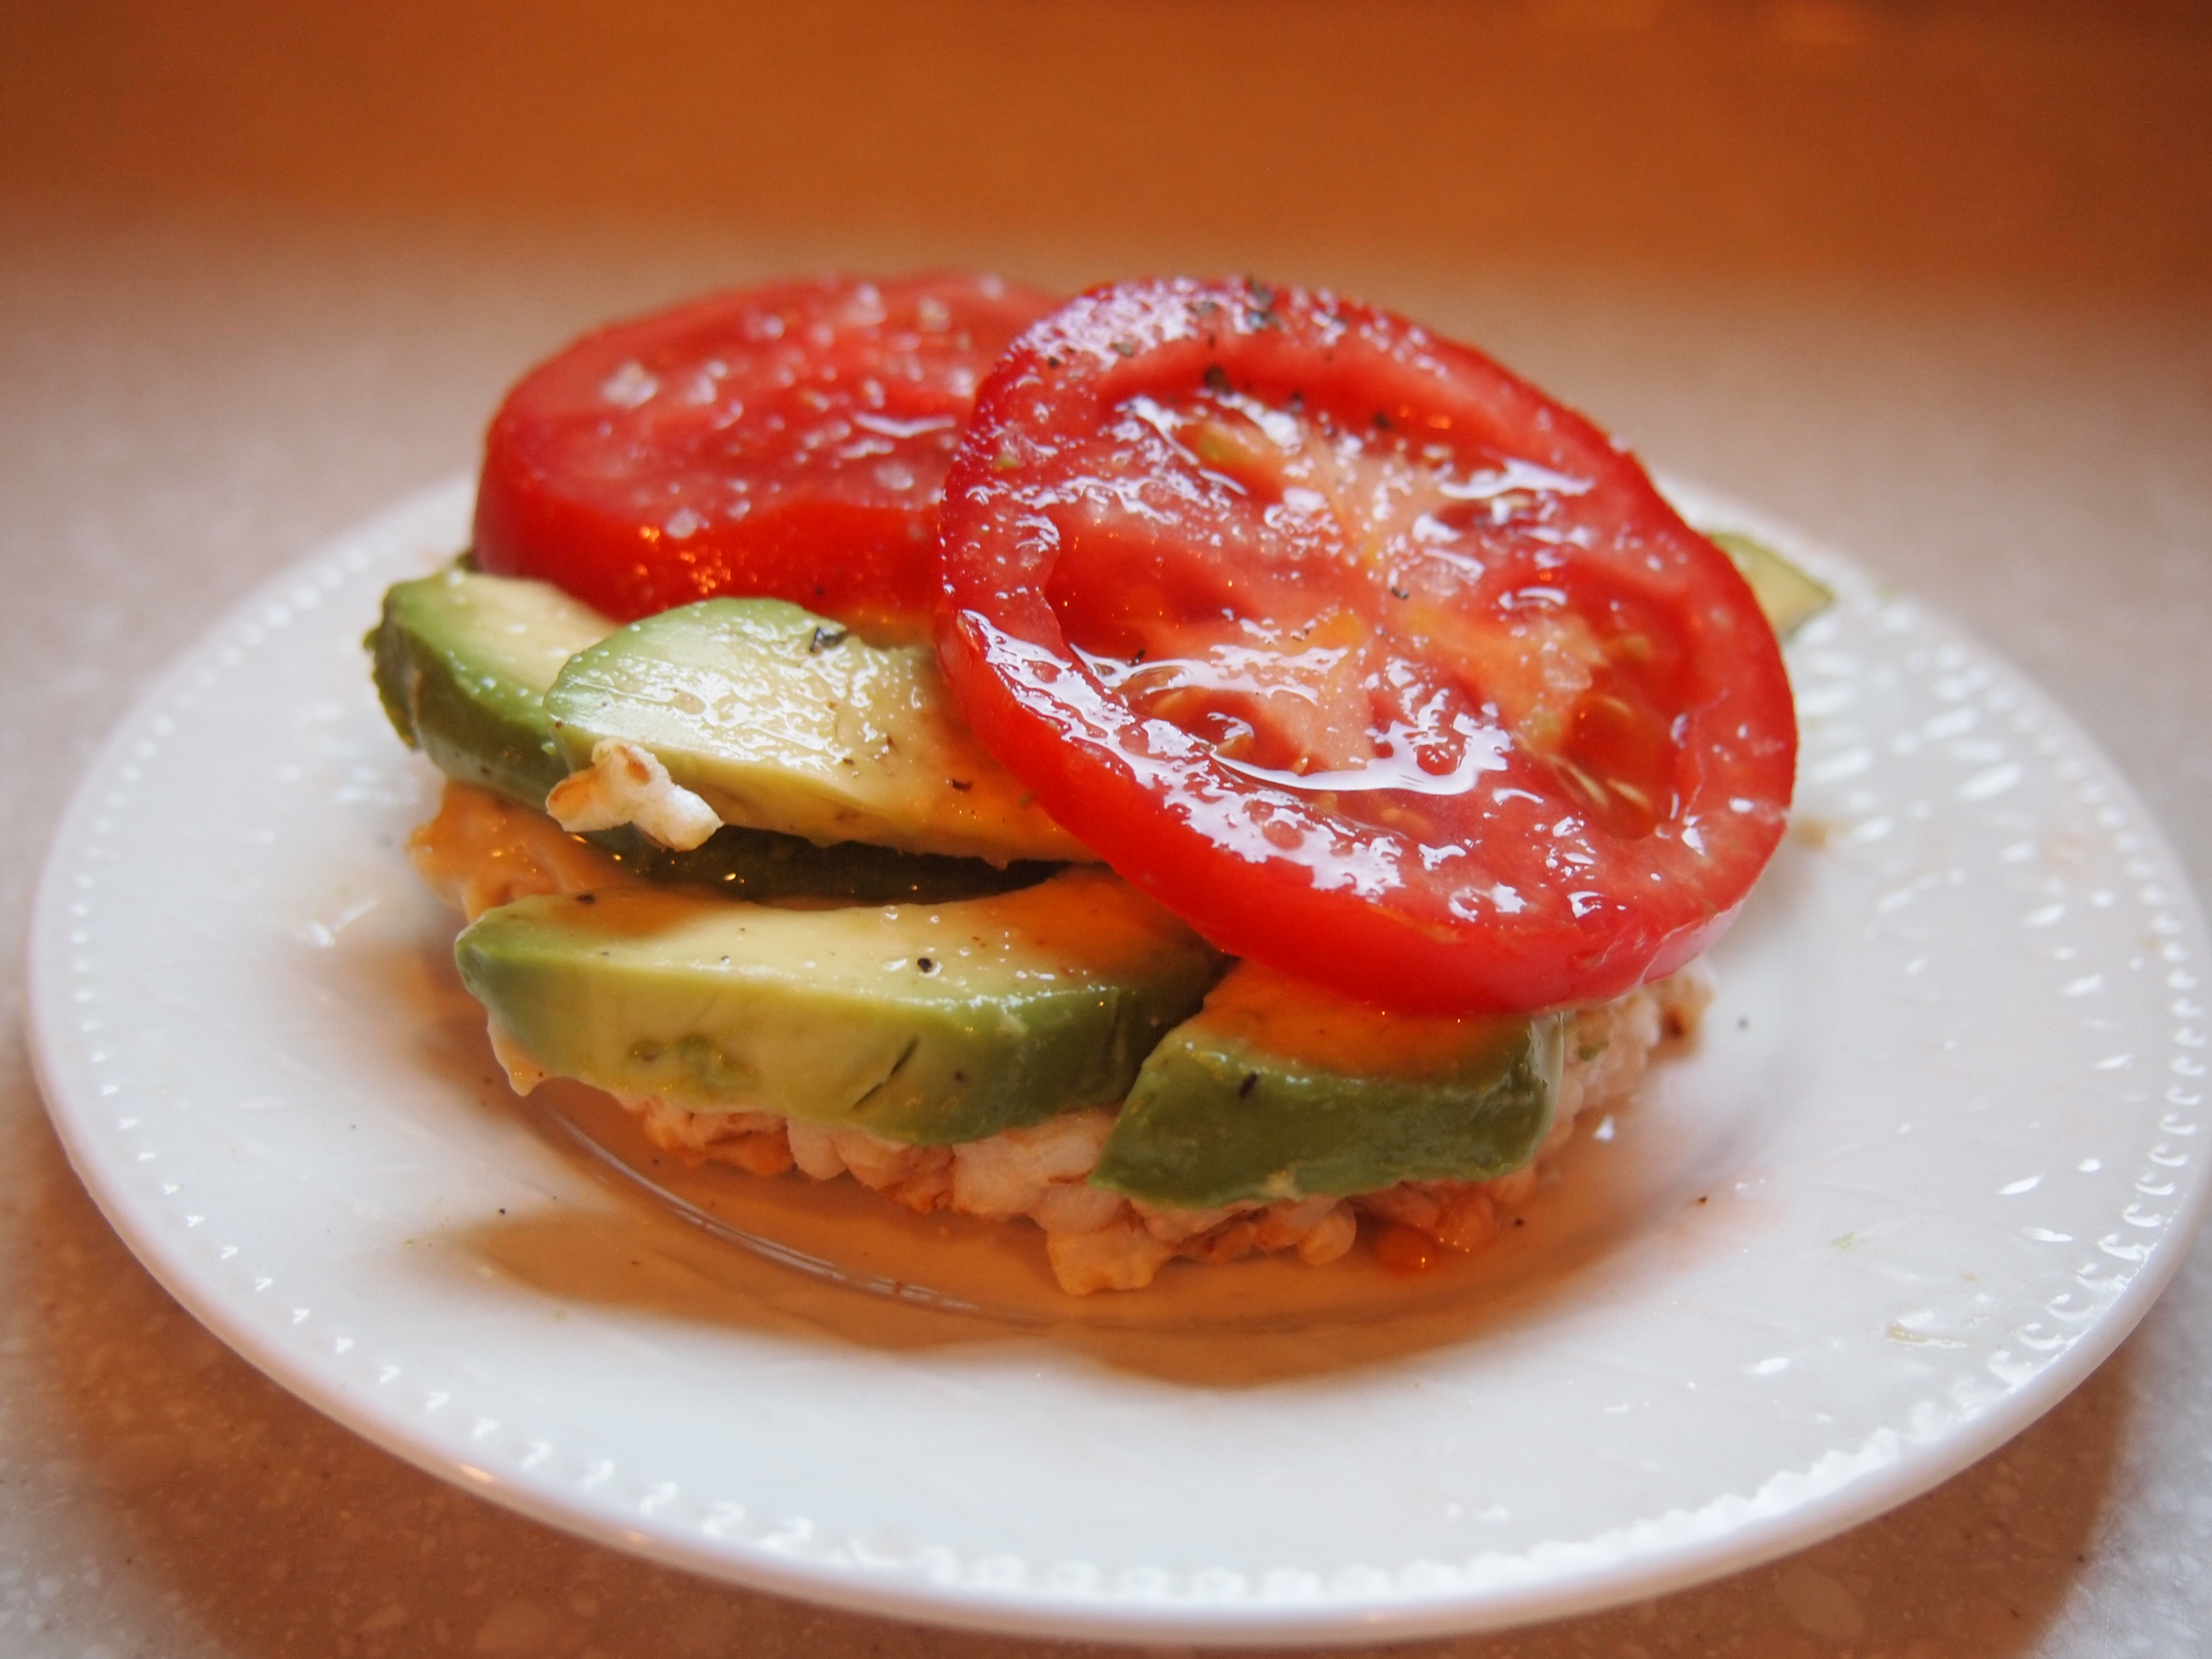 Avocado, Hummus and Tomato on a Brown Rice Cake - Copyright Jo-Ann Blondin